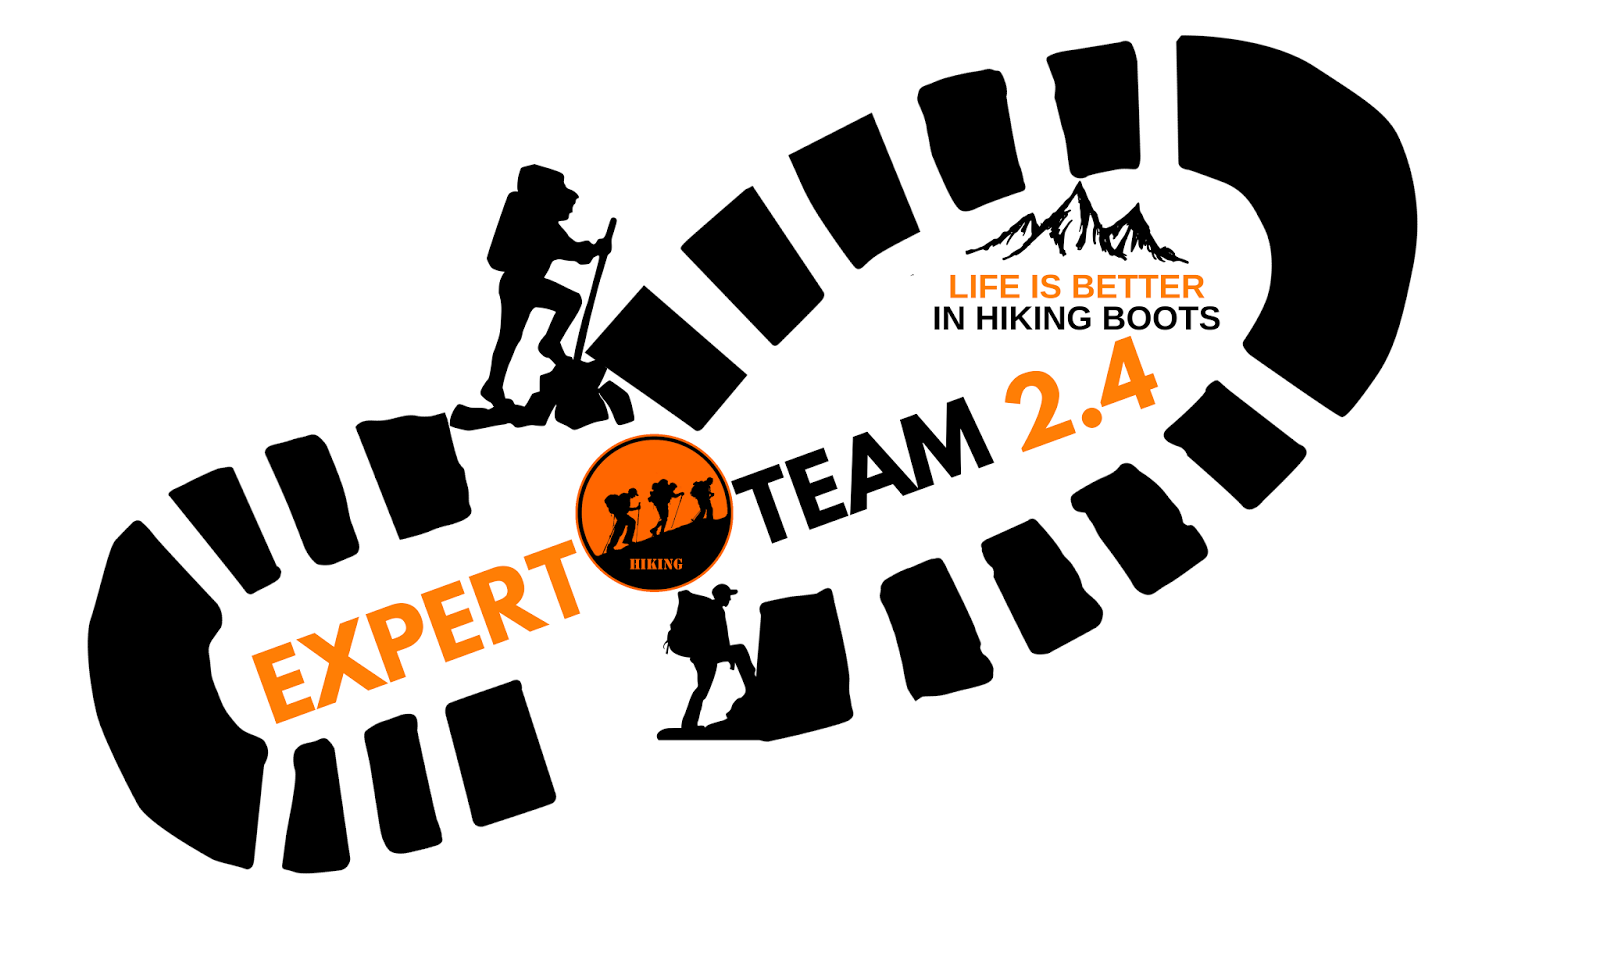 Hiking Logo - Expert Hiking Team 2.4: EXPERT HIKING TEAM 2.4 - New Logo